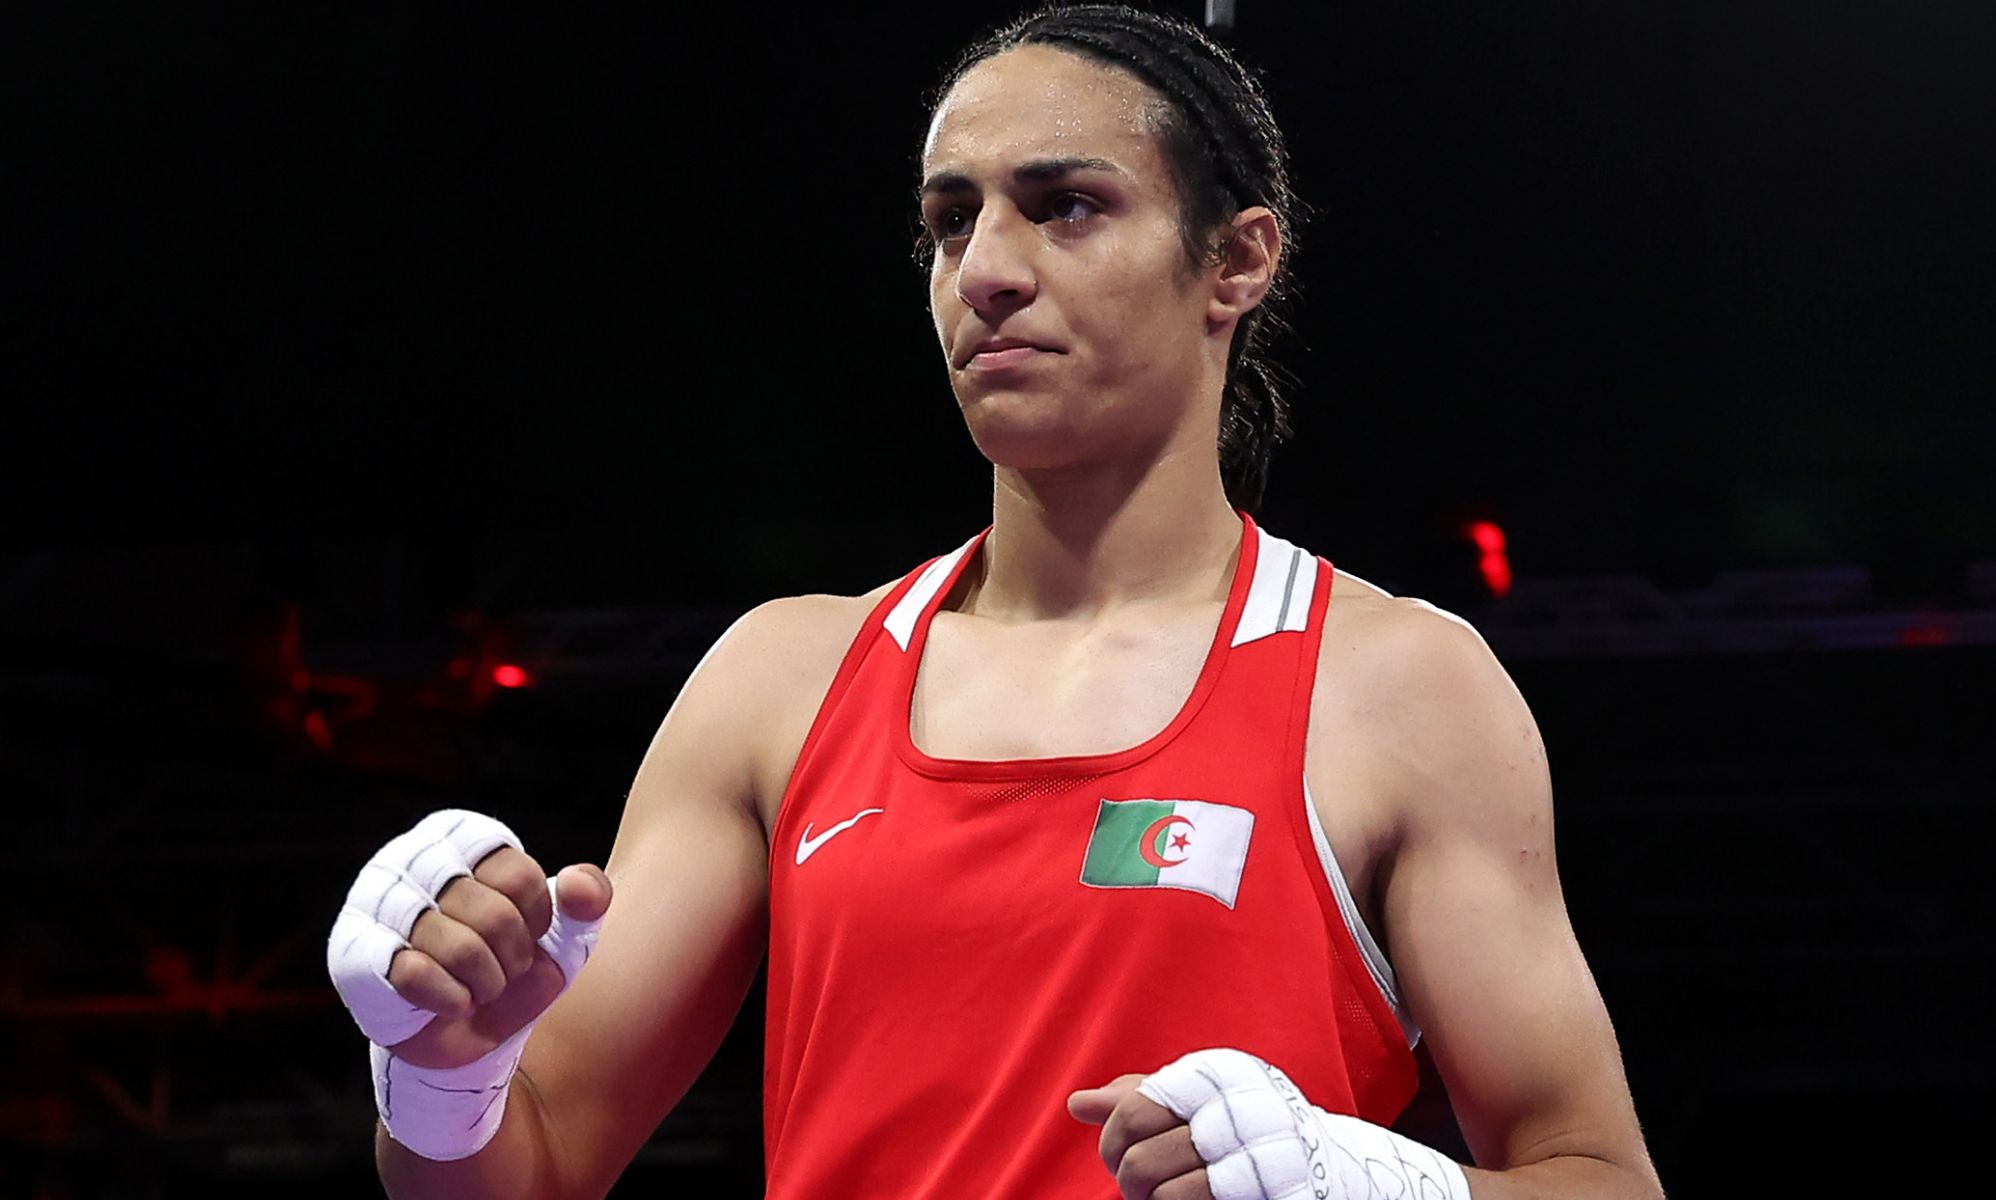 Imane Khelif denounces ‘bullying’ as she seeks gold at Olympics